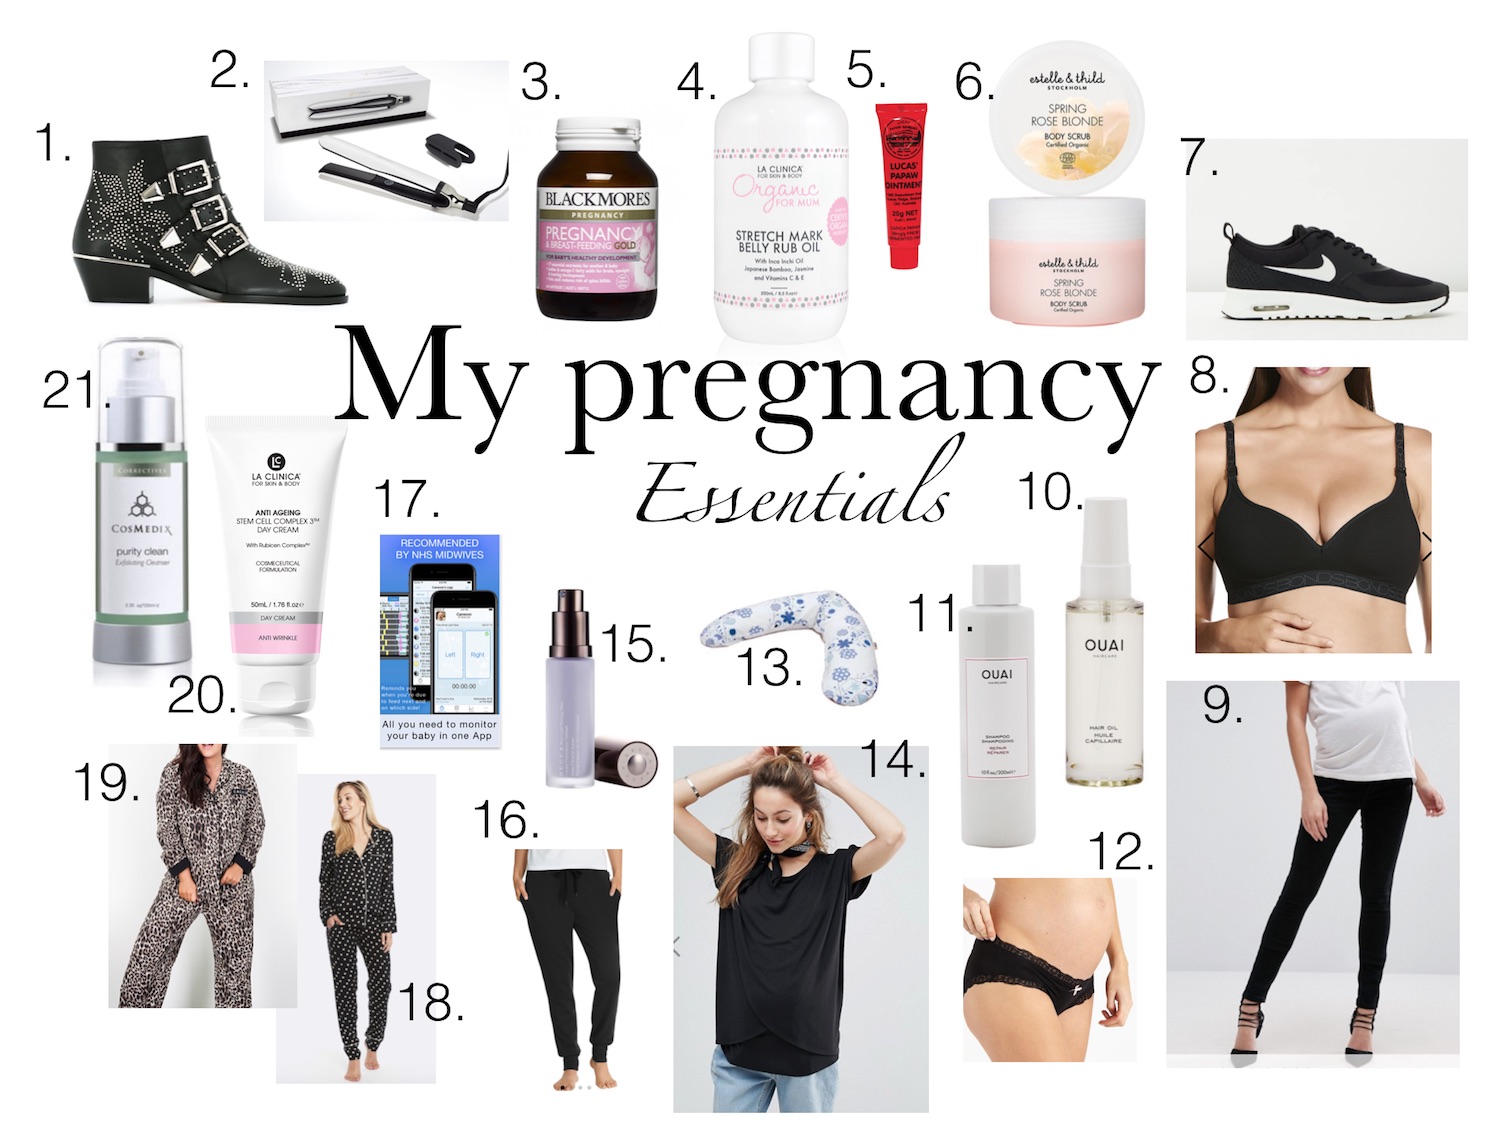 https://whatwouldkarldo.com/wp-content/uploads/2017/07/pregnancy-essentials.jpg